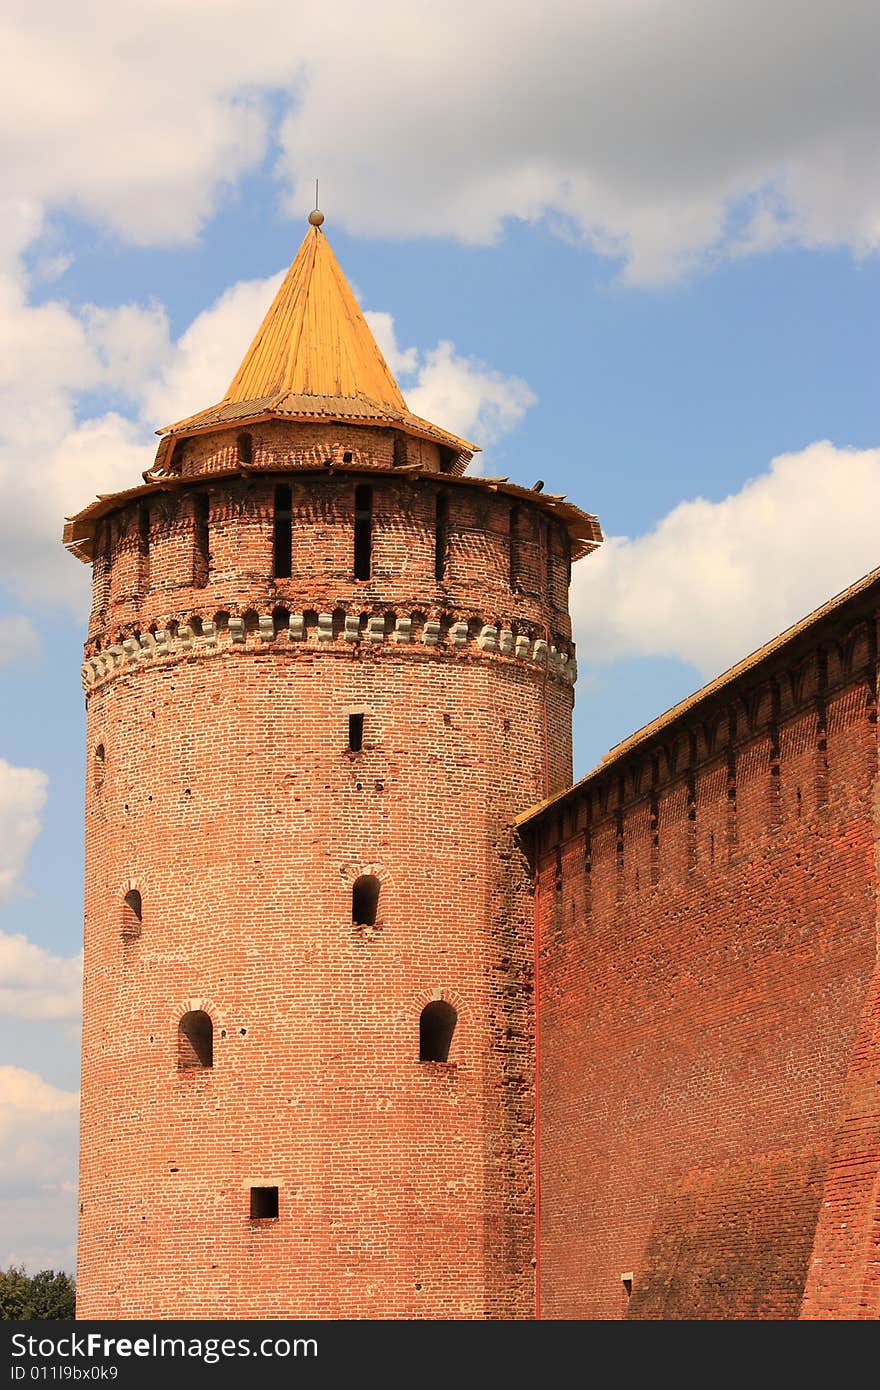 Fortress Kremlin walls in the town of Kolomna.